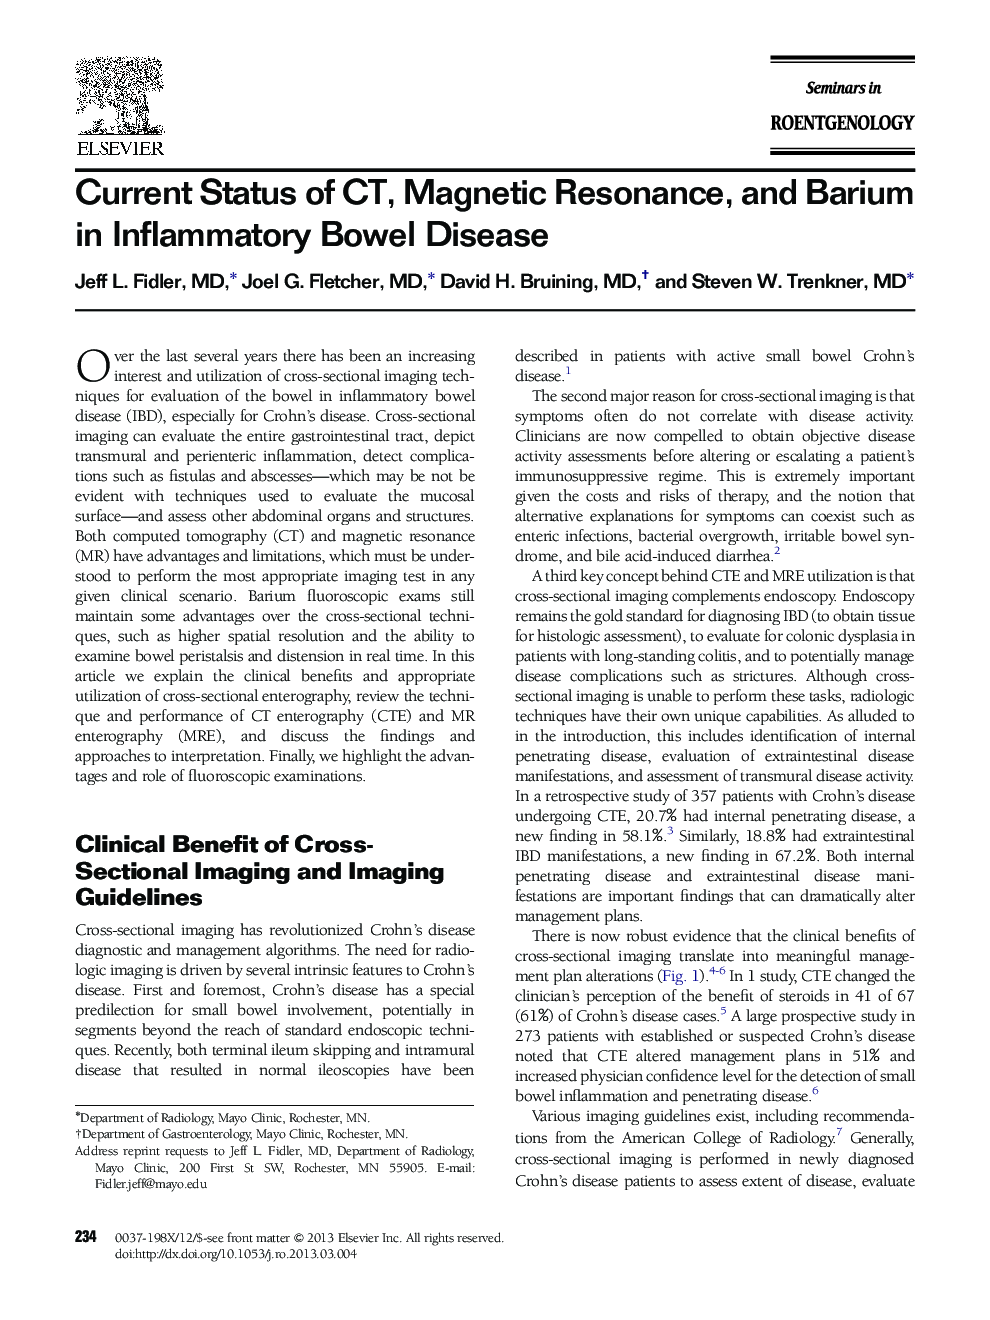 Current Status of CT, Magnetic Resonance, and Barium in Inflammatory Bowel Disease